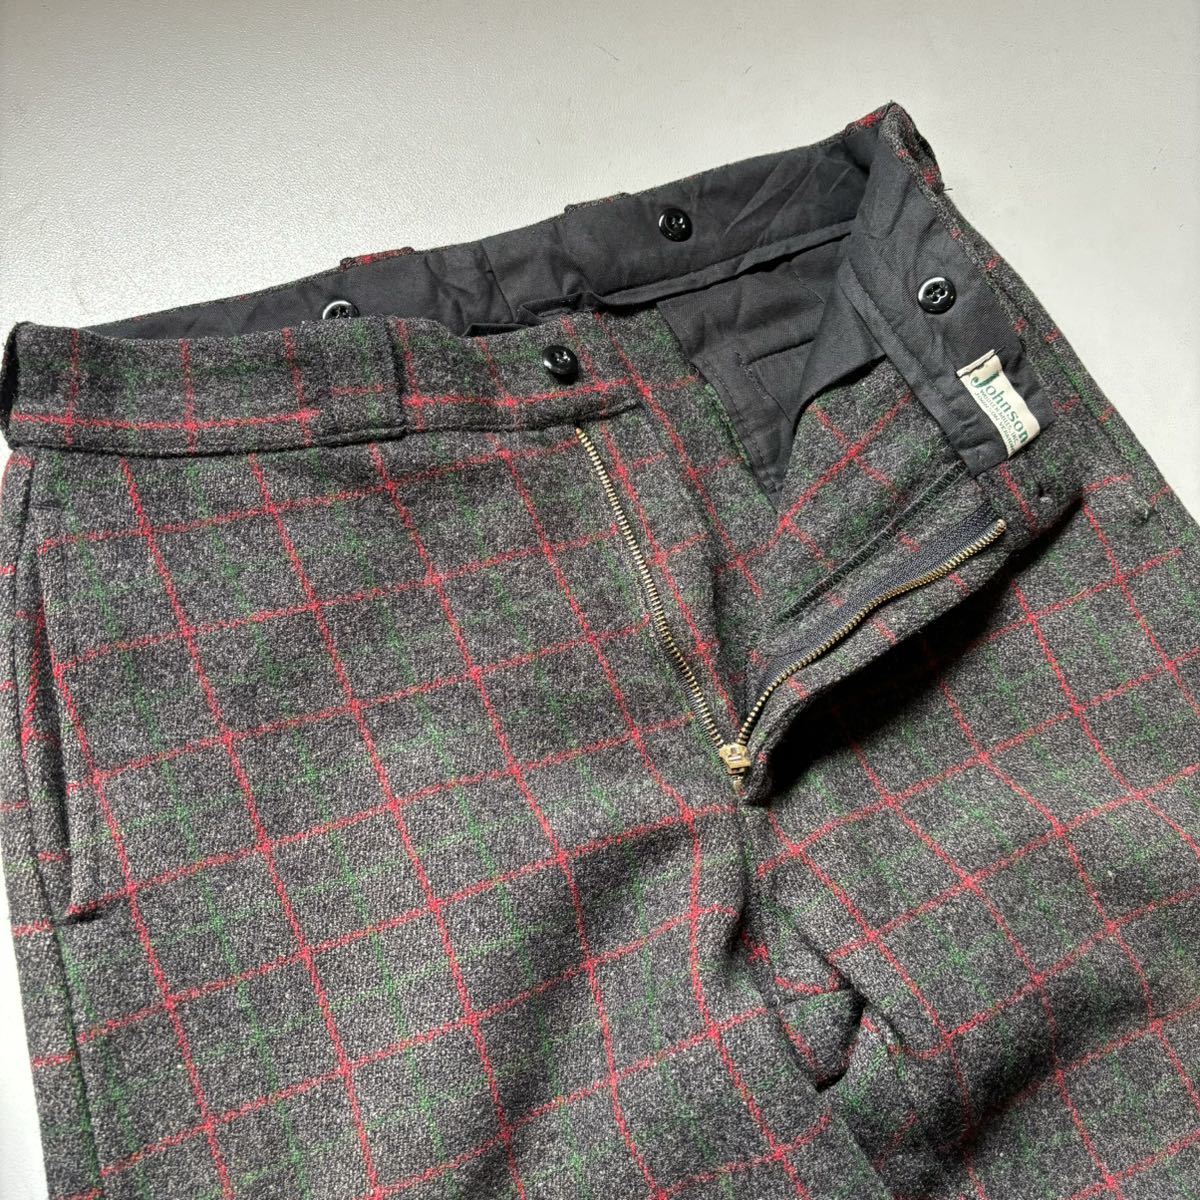 Johnson wool check pants “made in USA” ウールチェックパンツ USA製 アメリカ製